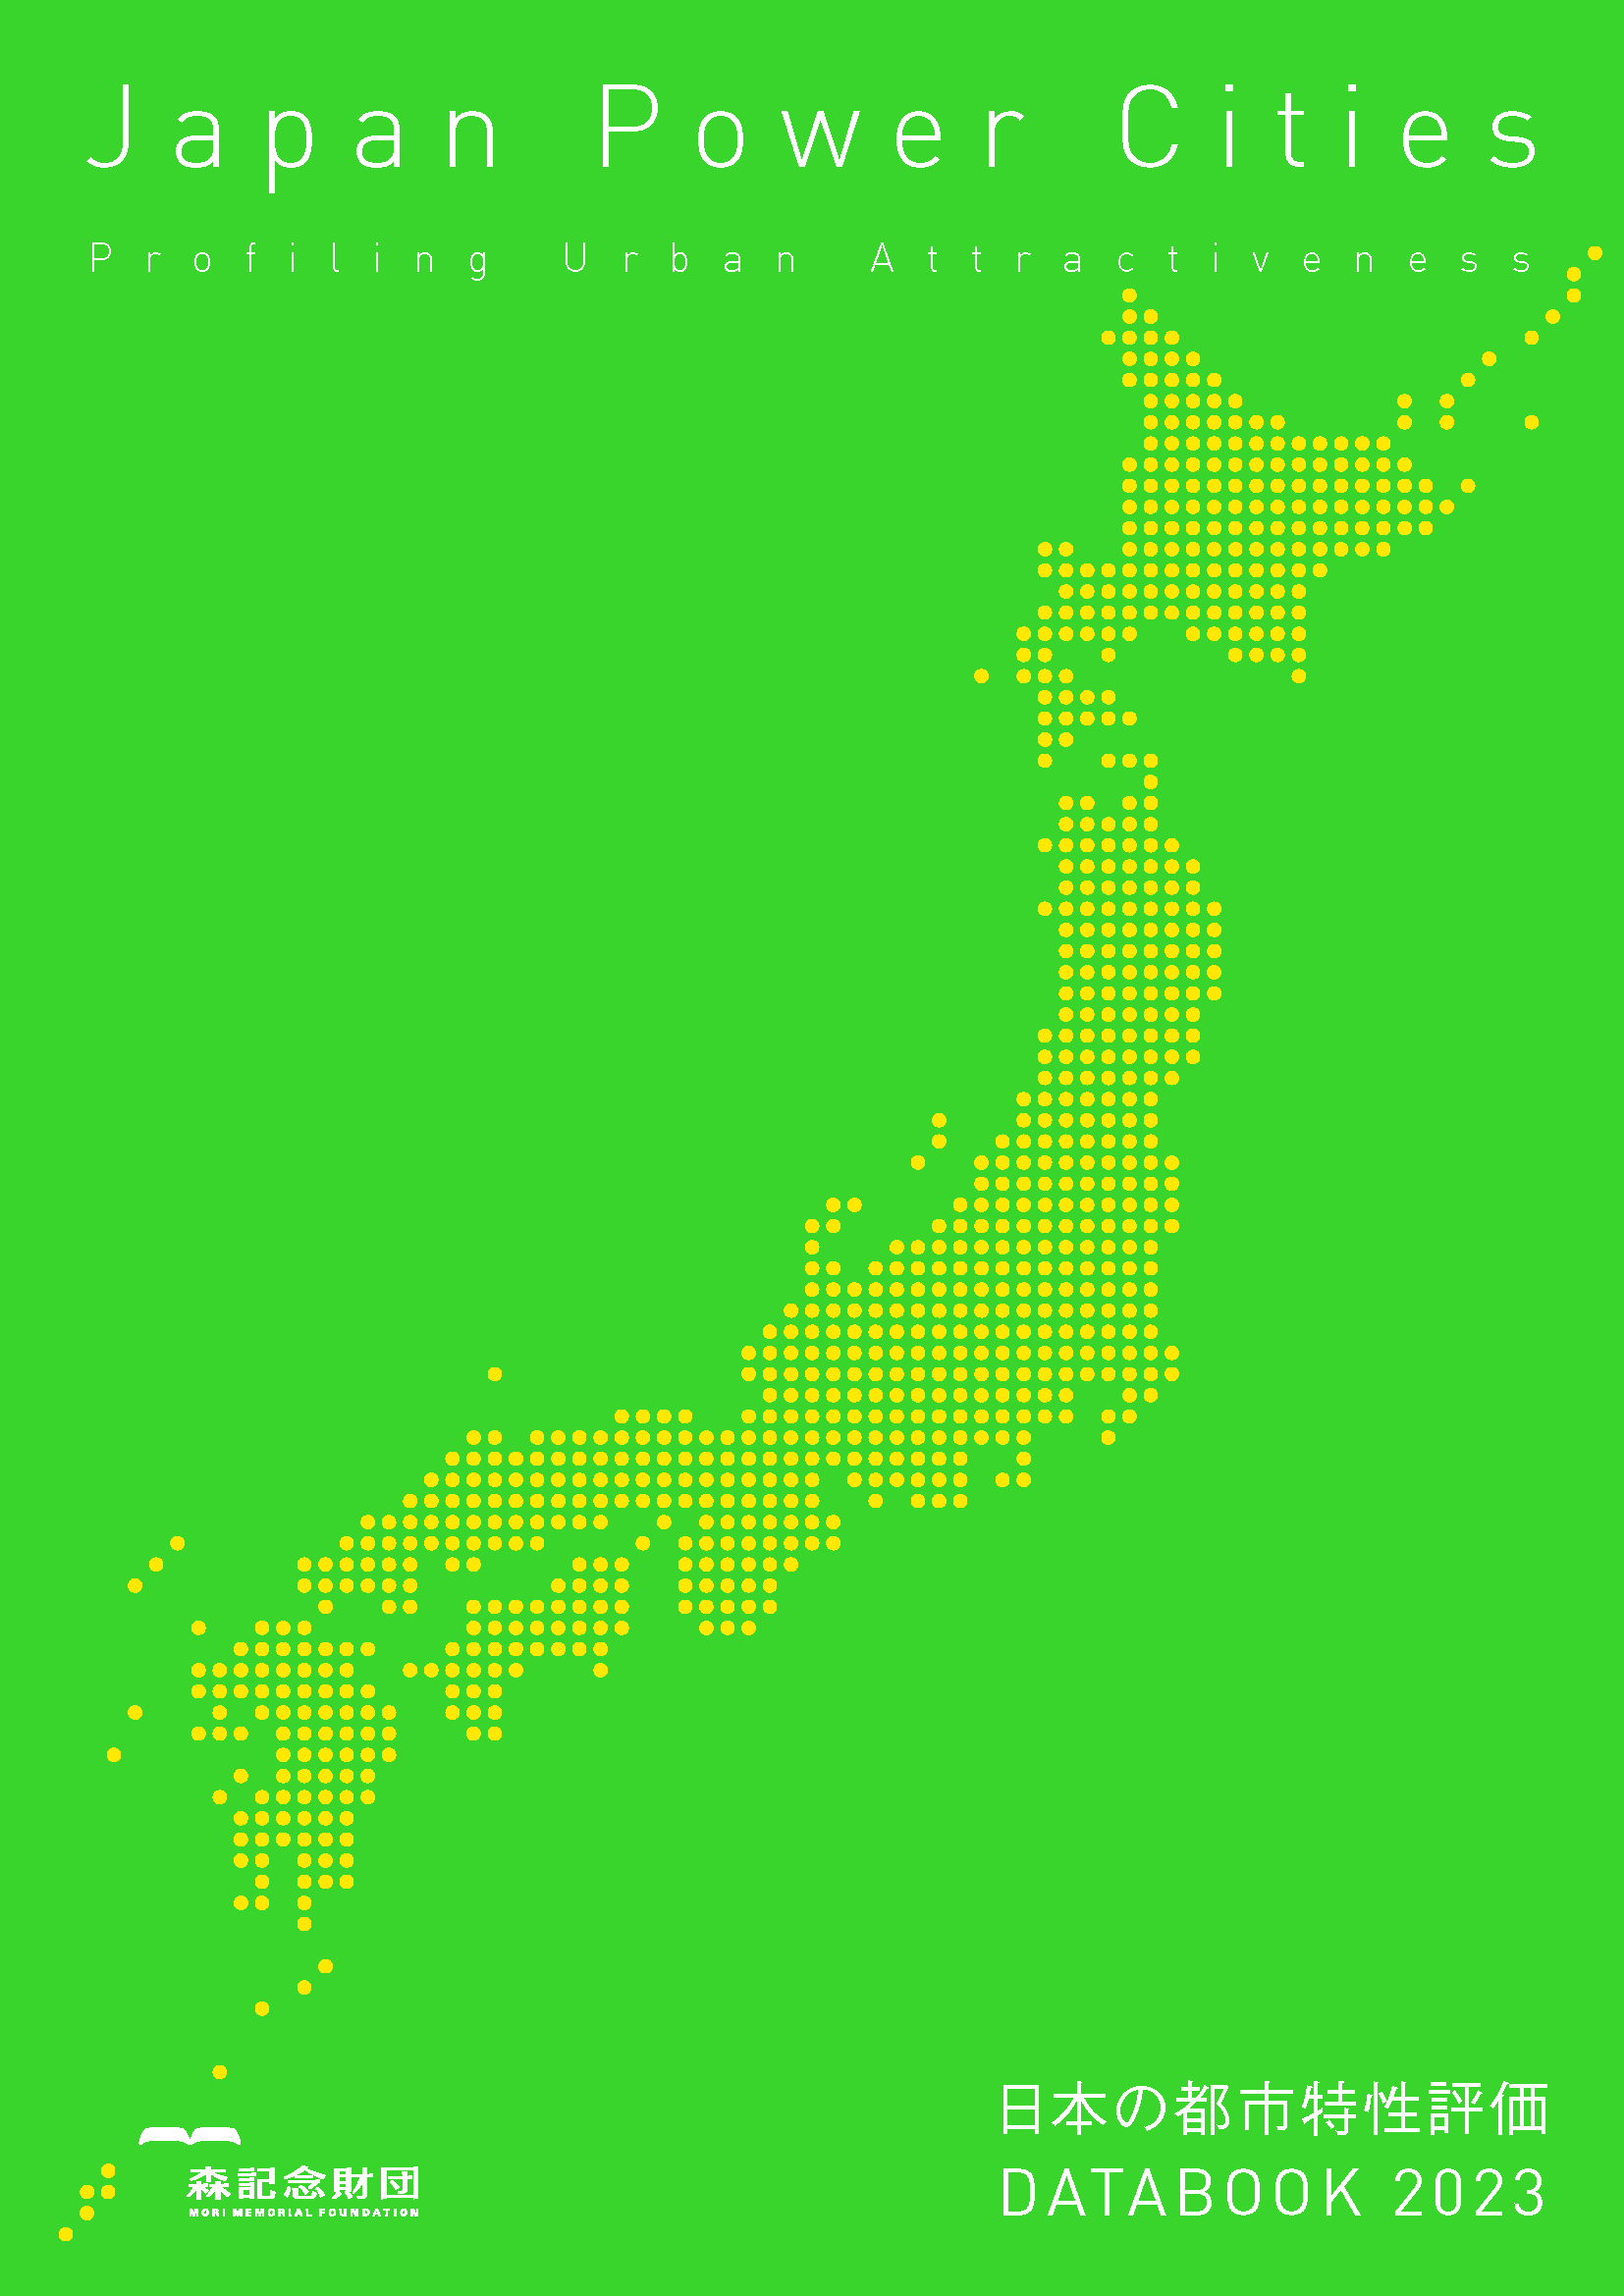 Japan Power Cities DATABOOK 2023